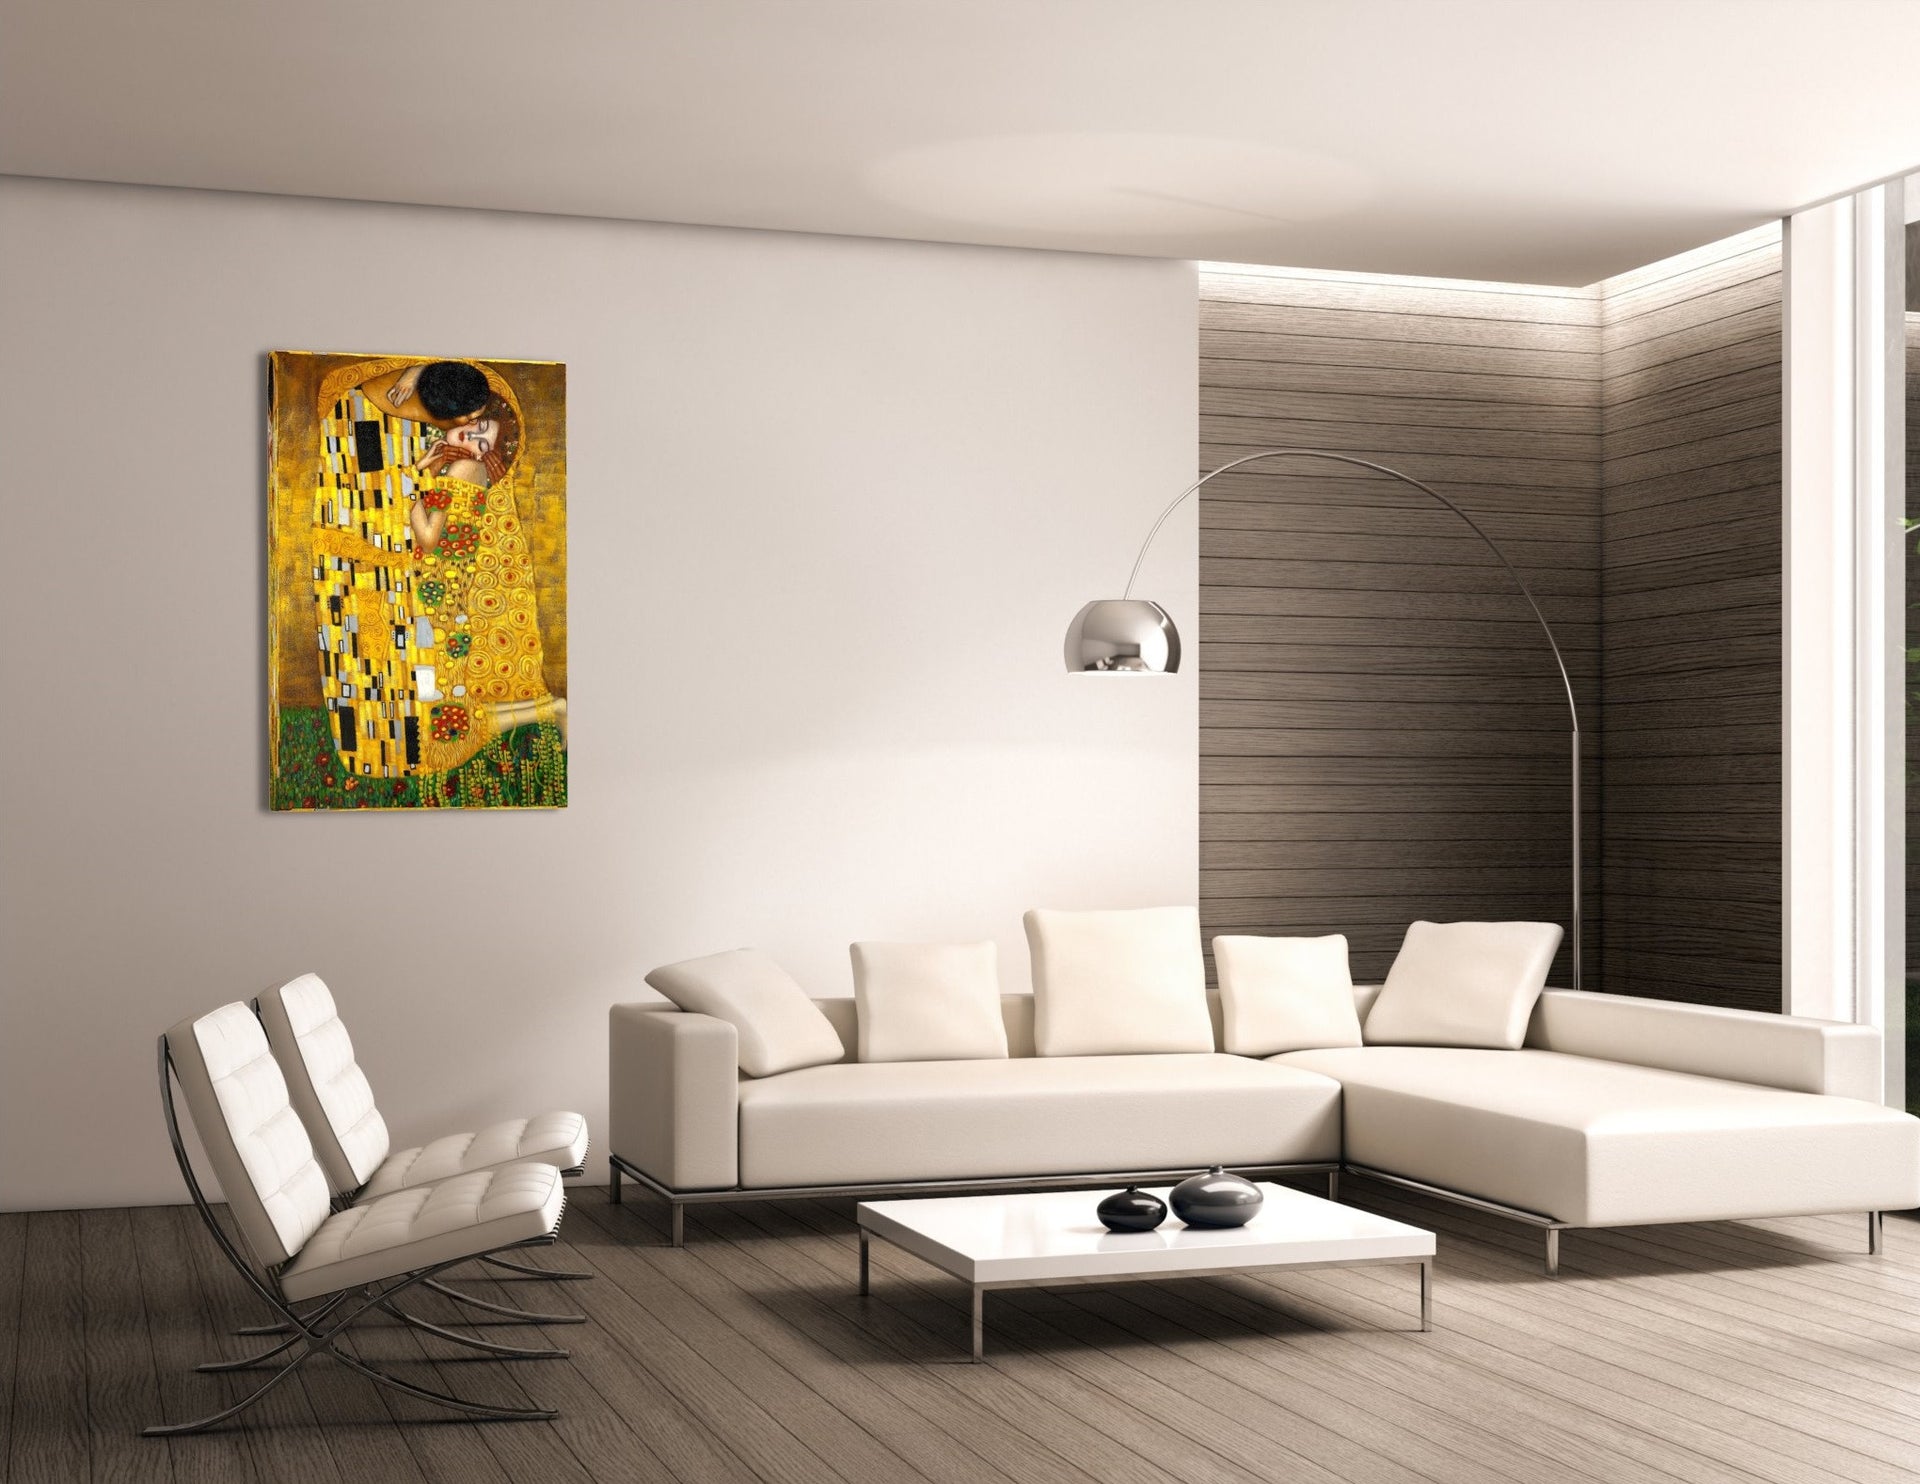 Piet Mondrian - Grey Tree - Get Custom Art